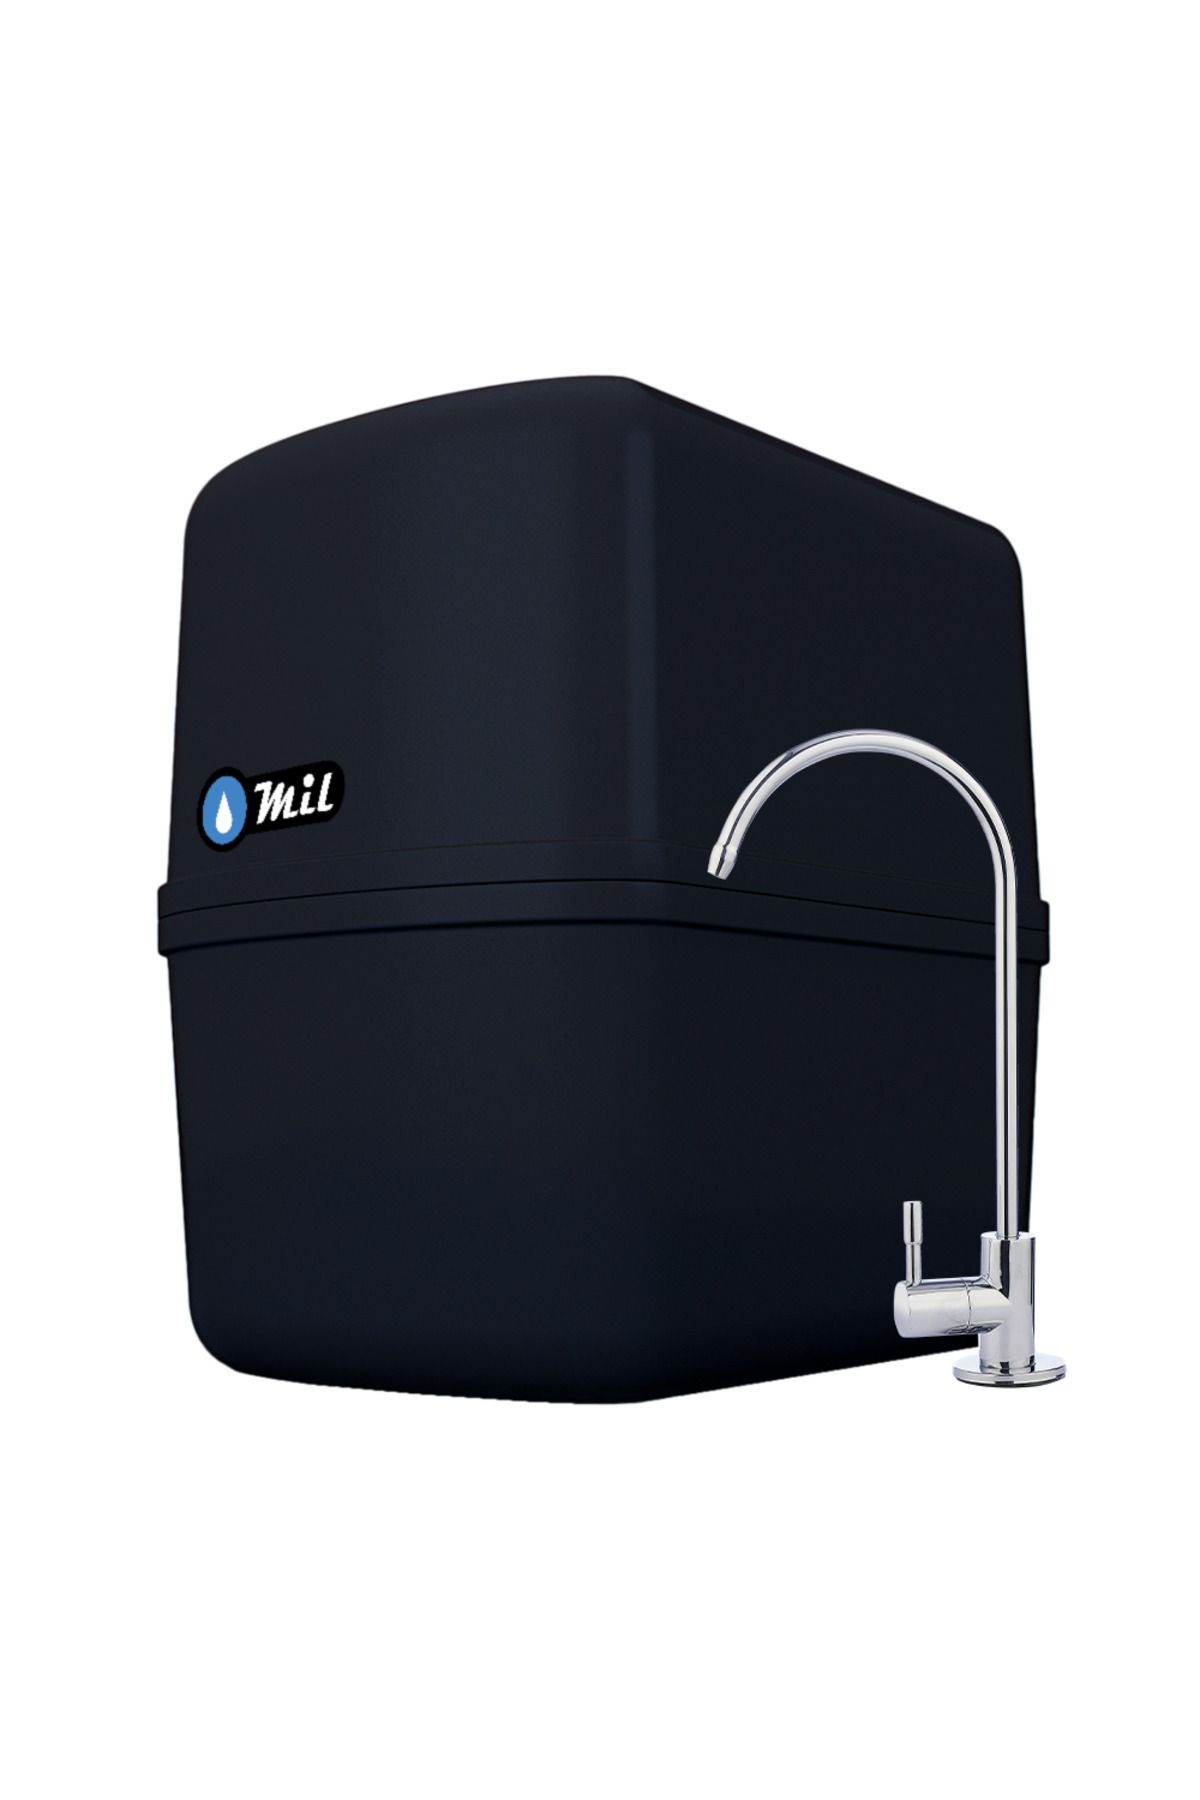 Mil Elegance Kapalı Kasa Çelik Tanklı 80 Gpd Aquaflo Membranlı Su Arıtma Cihazı (DNP5-M-A)